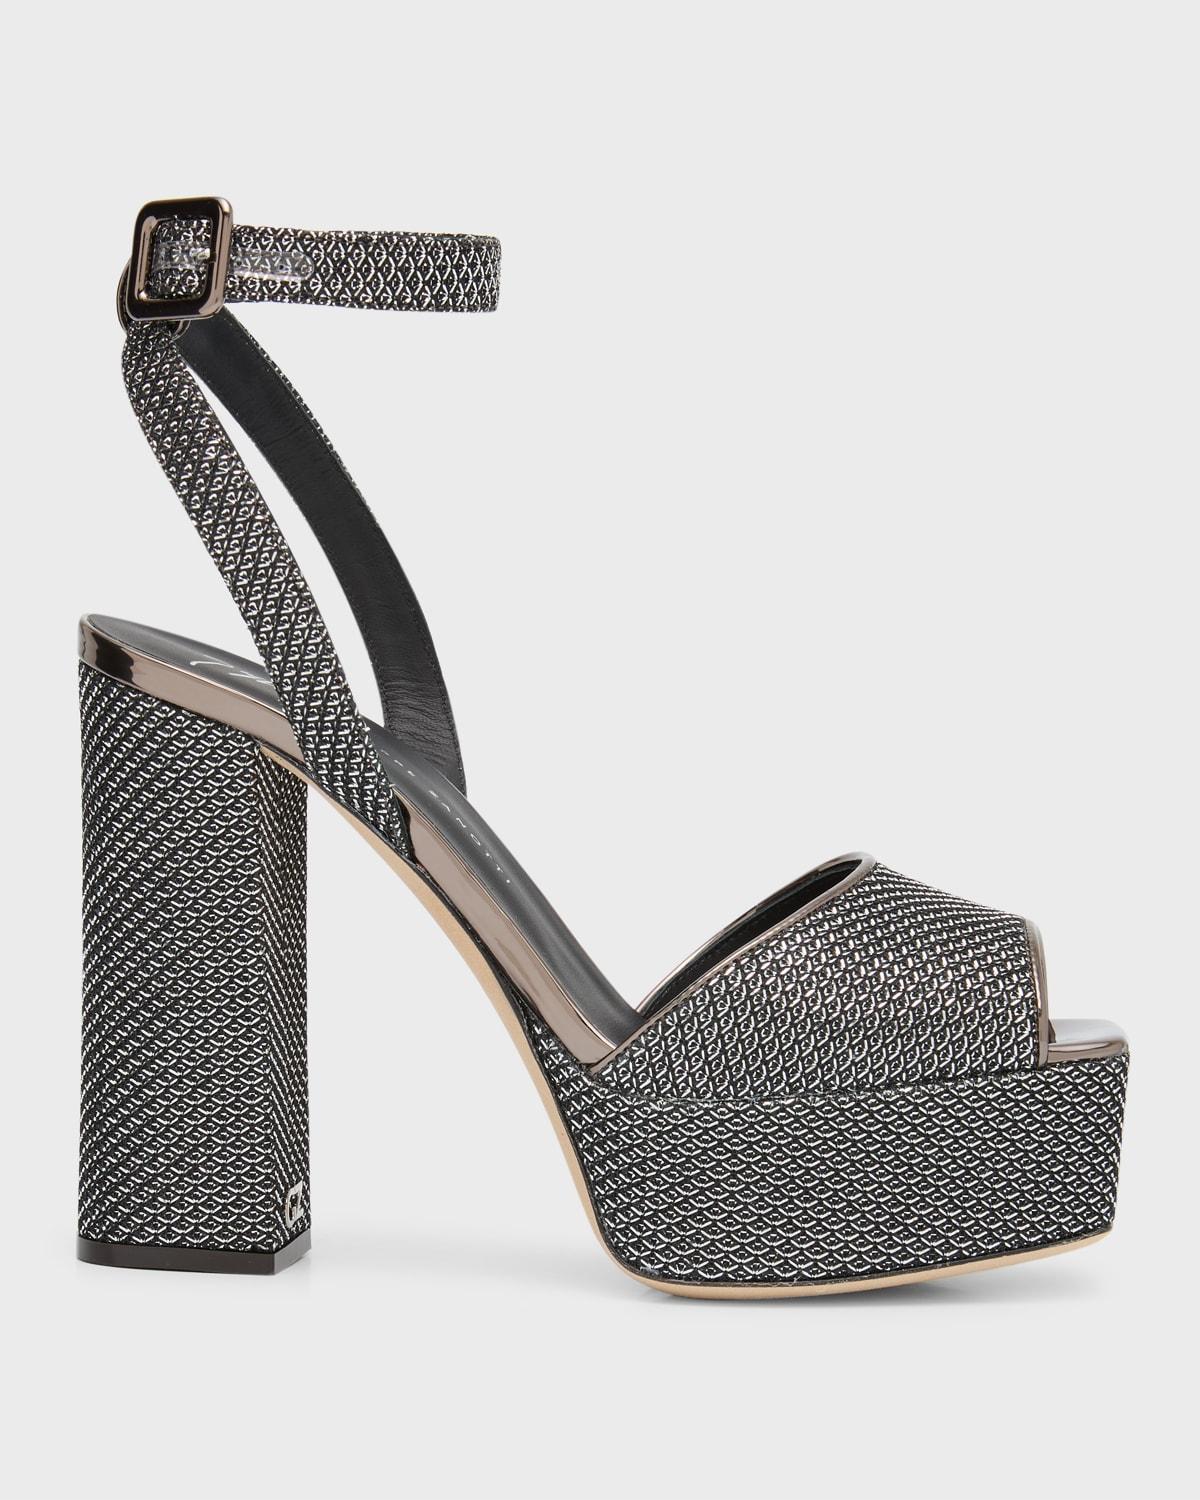 Giuseppe Zanotti Metallic Ankle-Strap Platform Sandals - Size: 7B / 37EU - ANTHRACITE Product Image